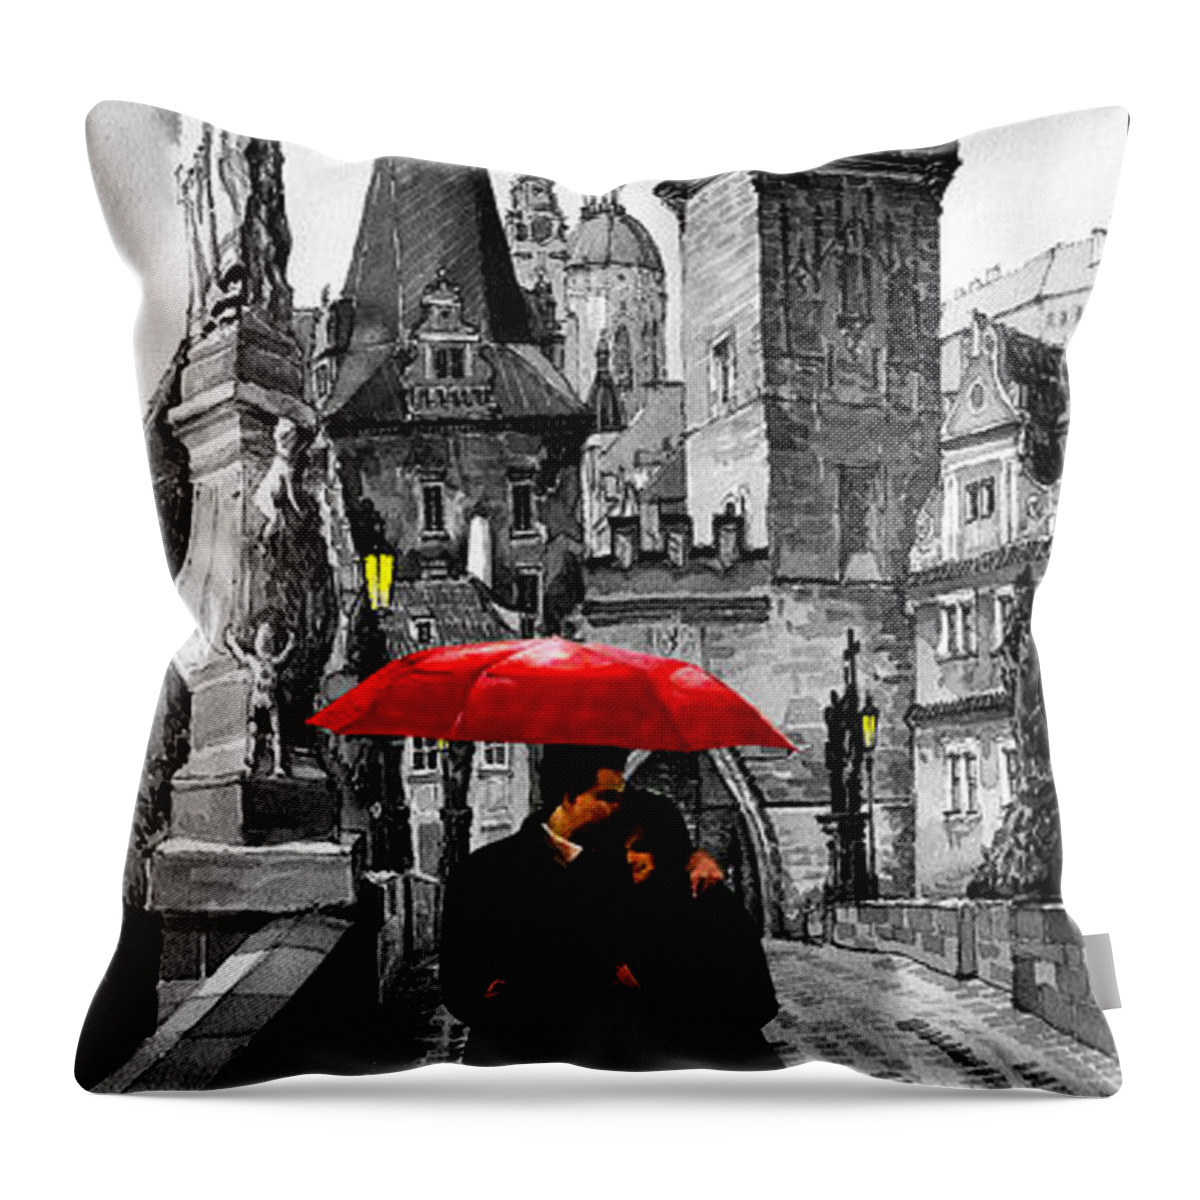 Mix Media Throw Pillow featuring the mixed media Red Umbrella by Yuriy Shevchuk